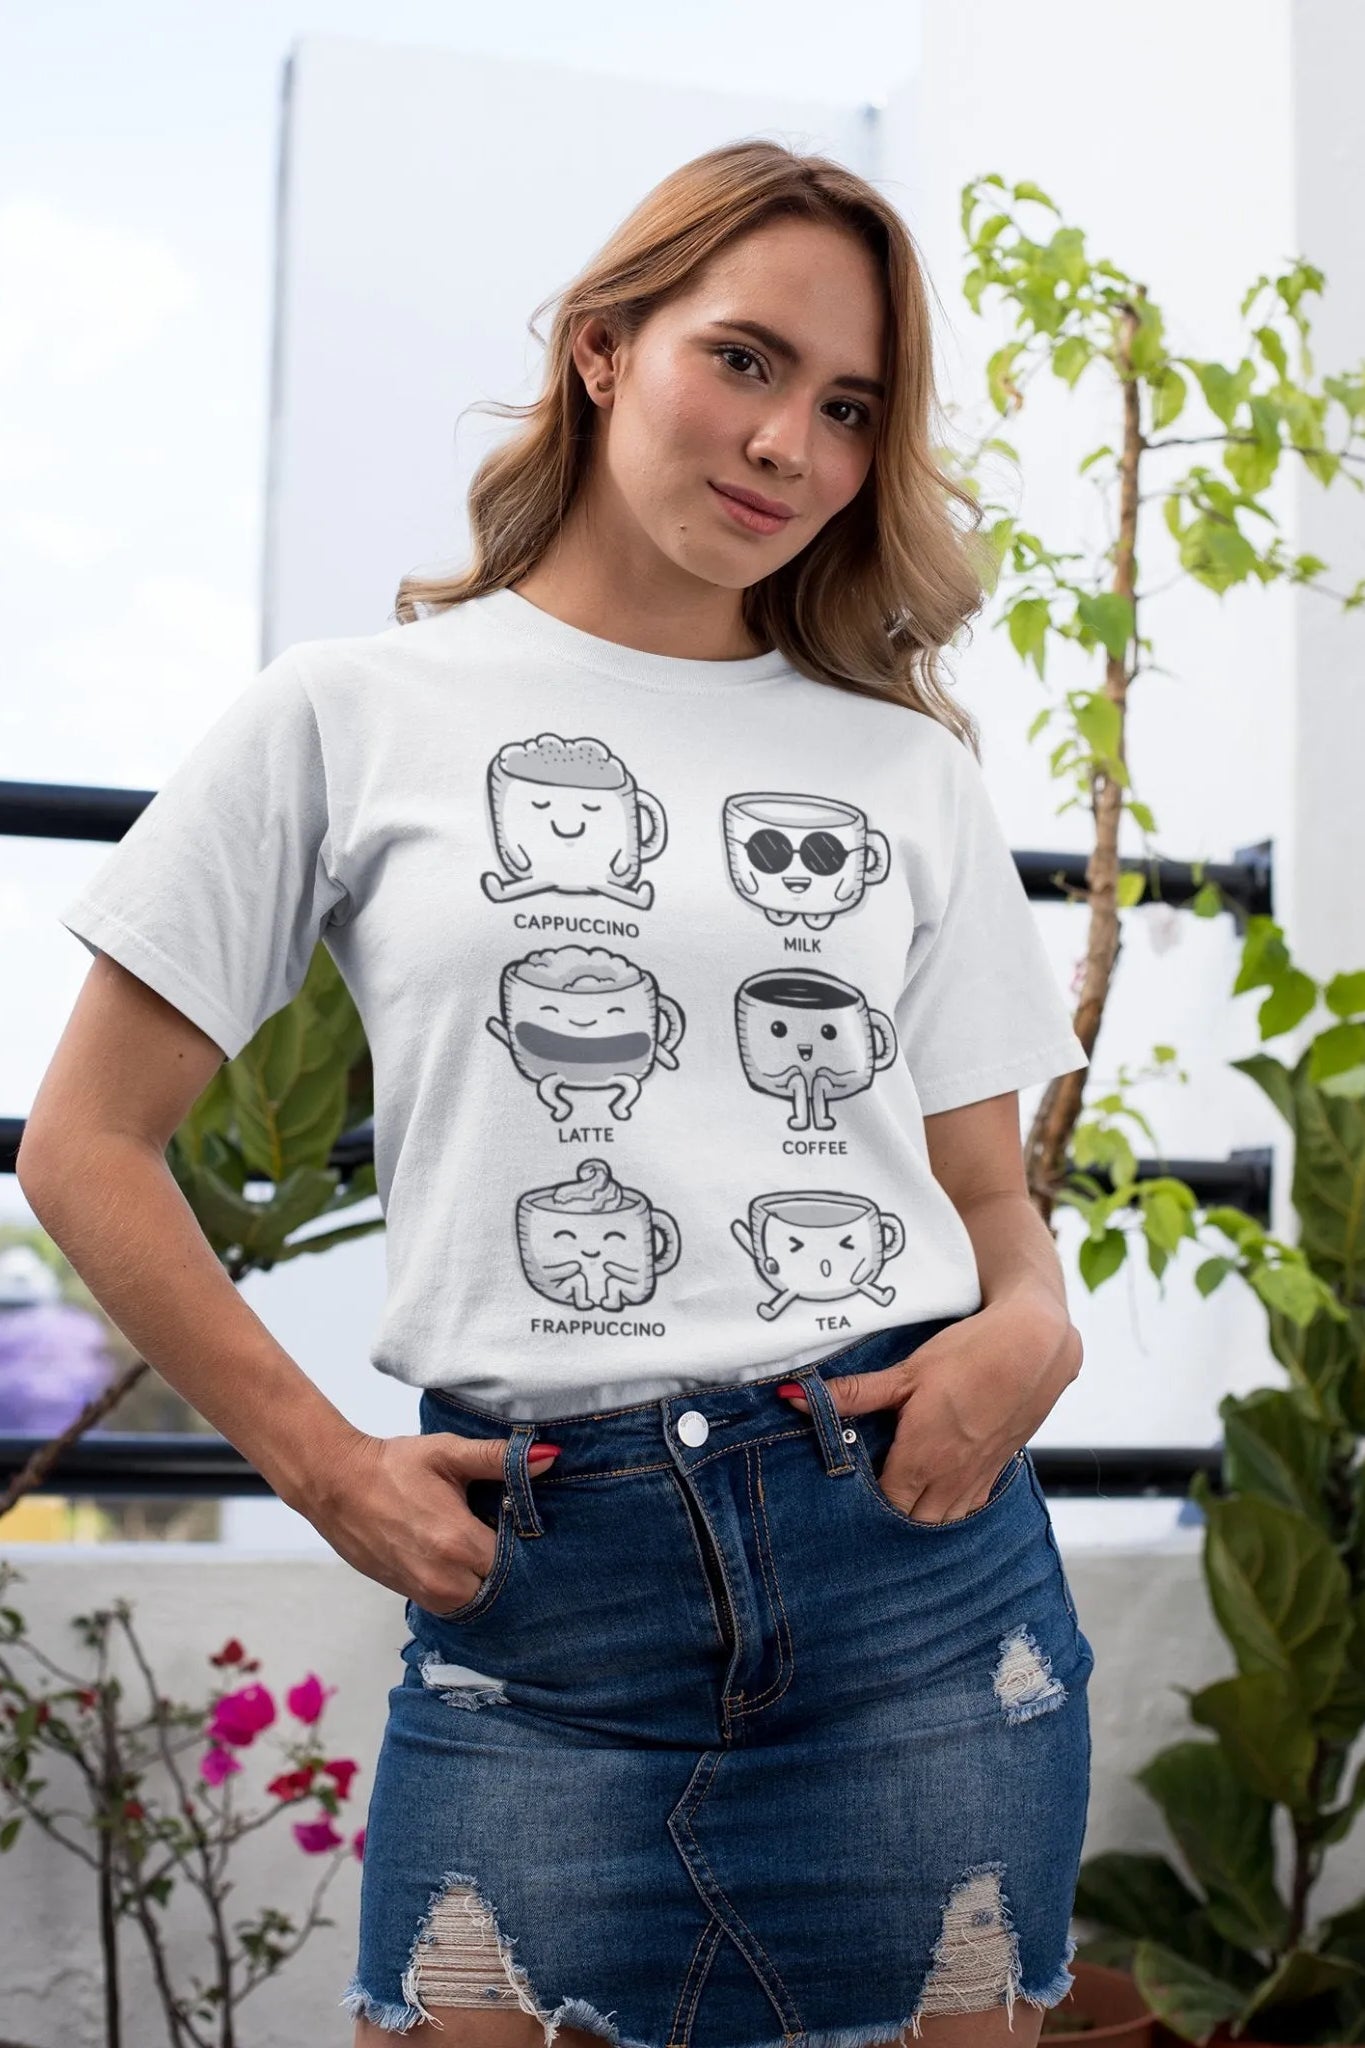 Hire an Artist - Print Me Shirts